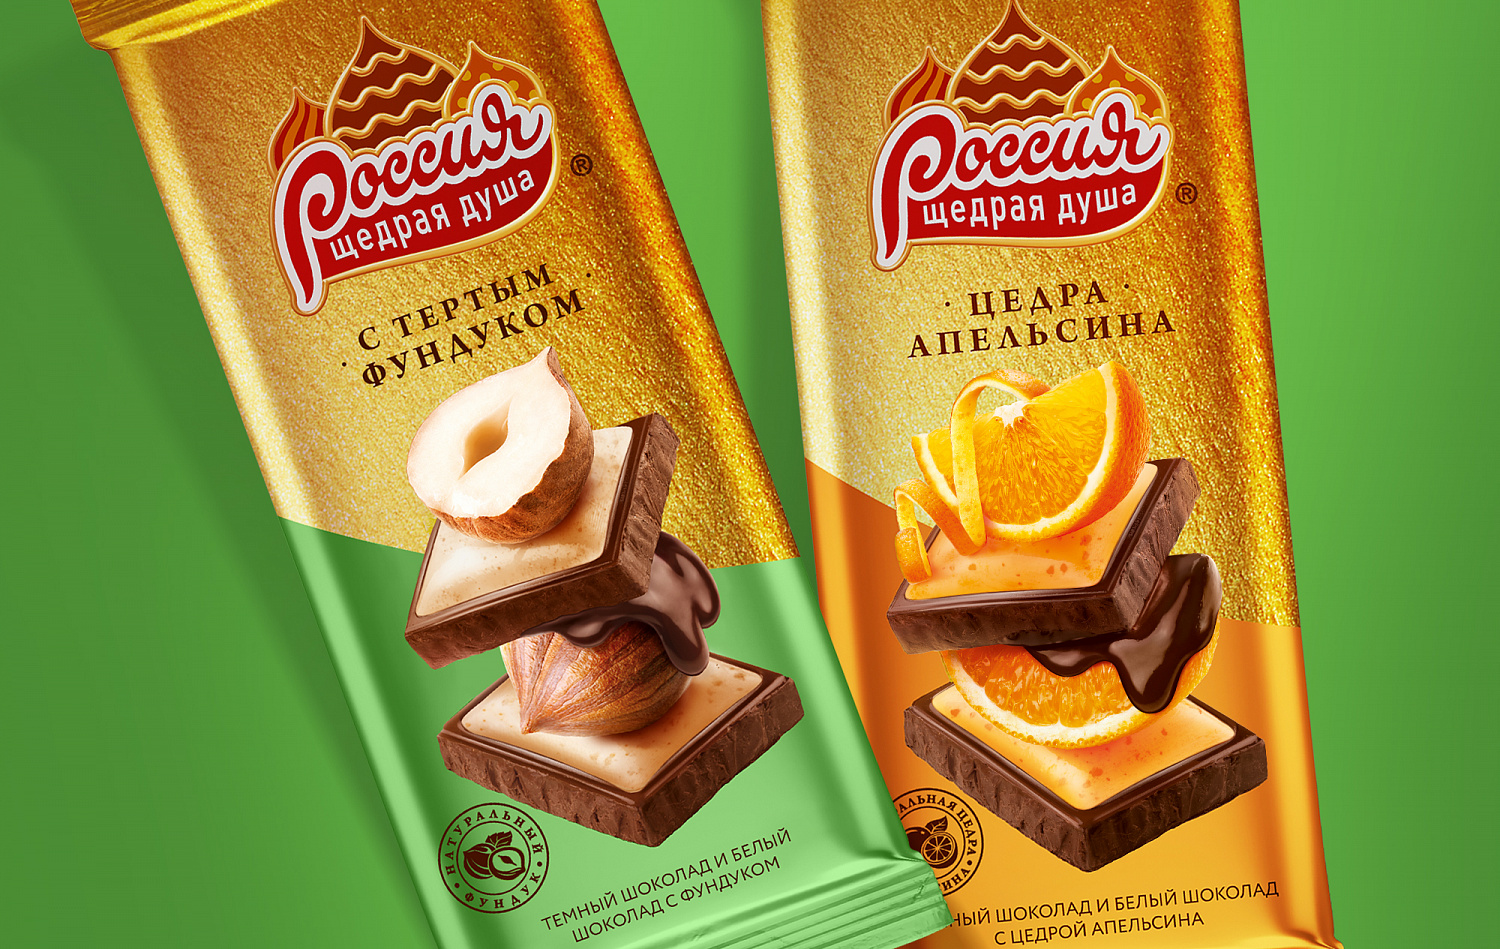 Шоколад Россия щедрая душа Сударушка